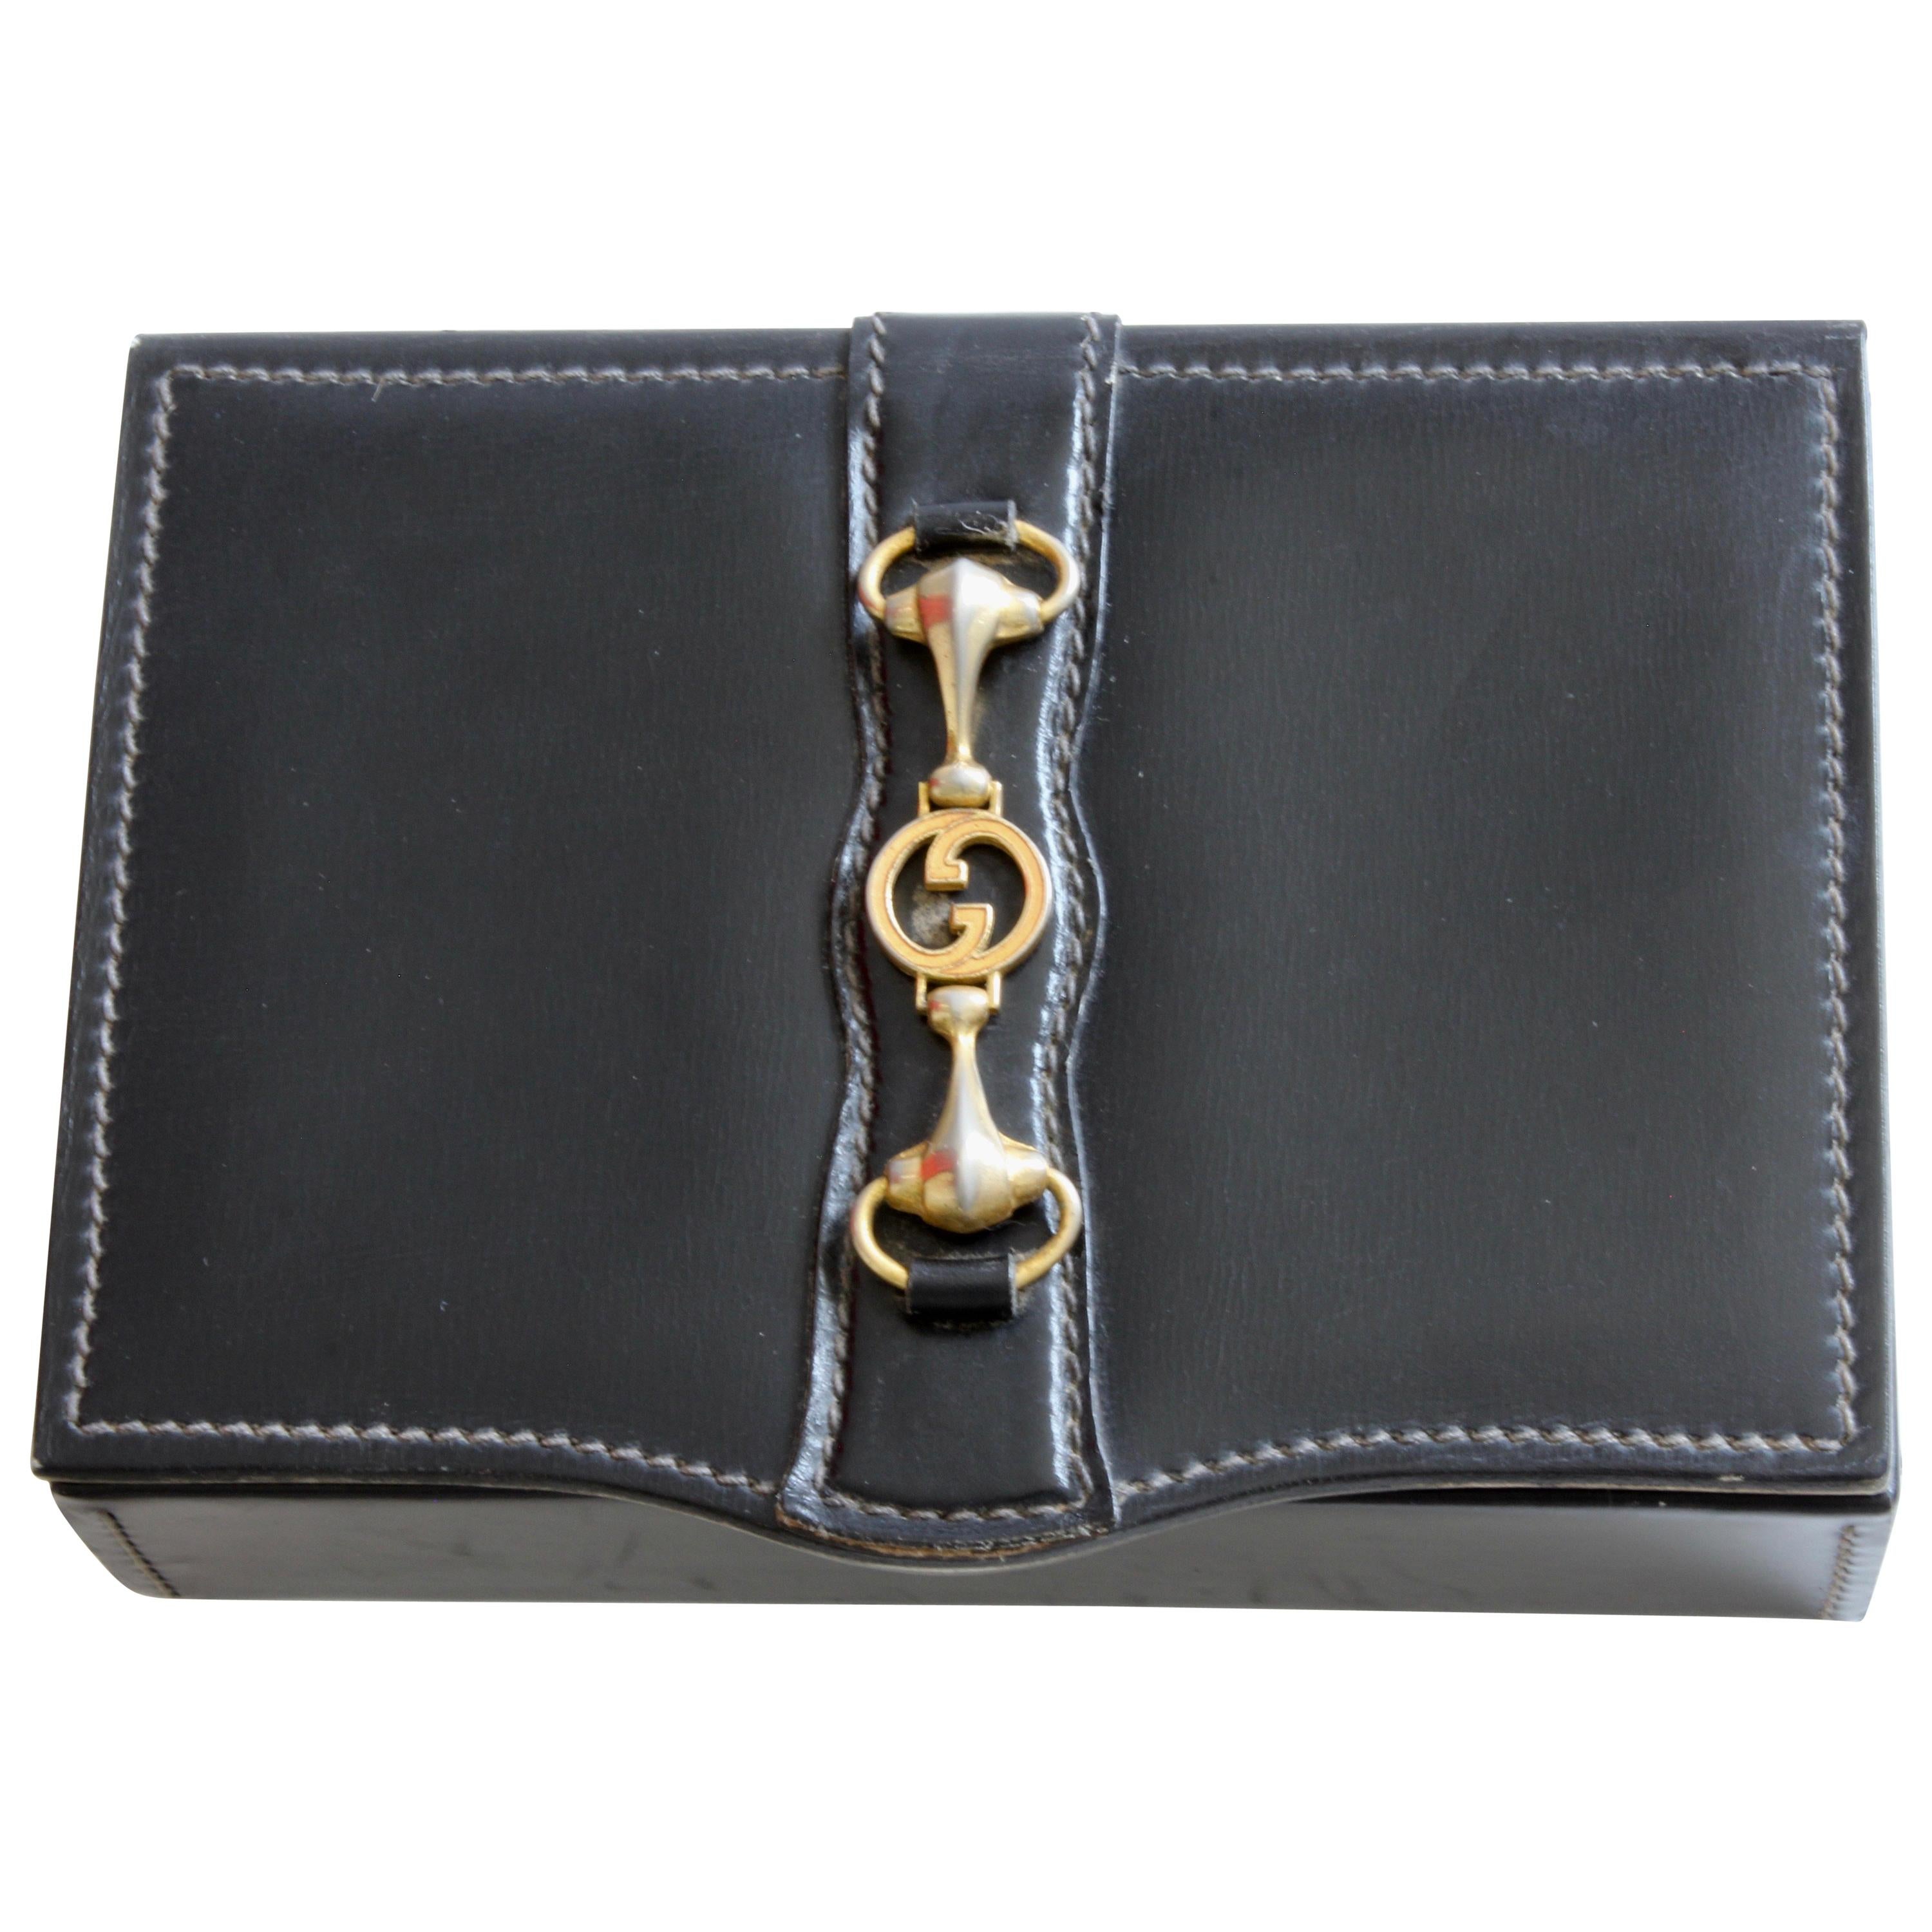 Vintage Gucci Black Leather Jewelry Case Trinket Box Equestrian Motif Horse Bit